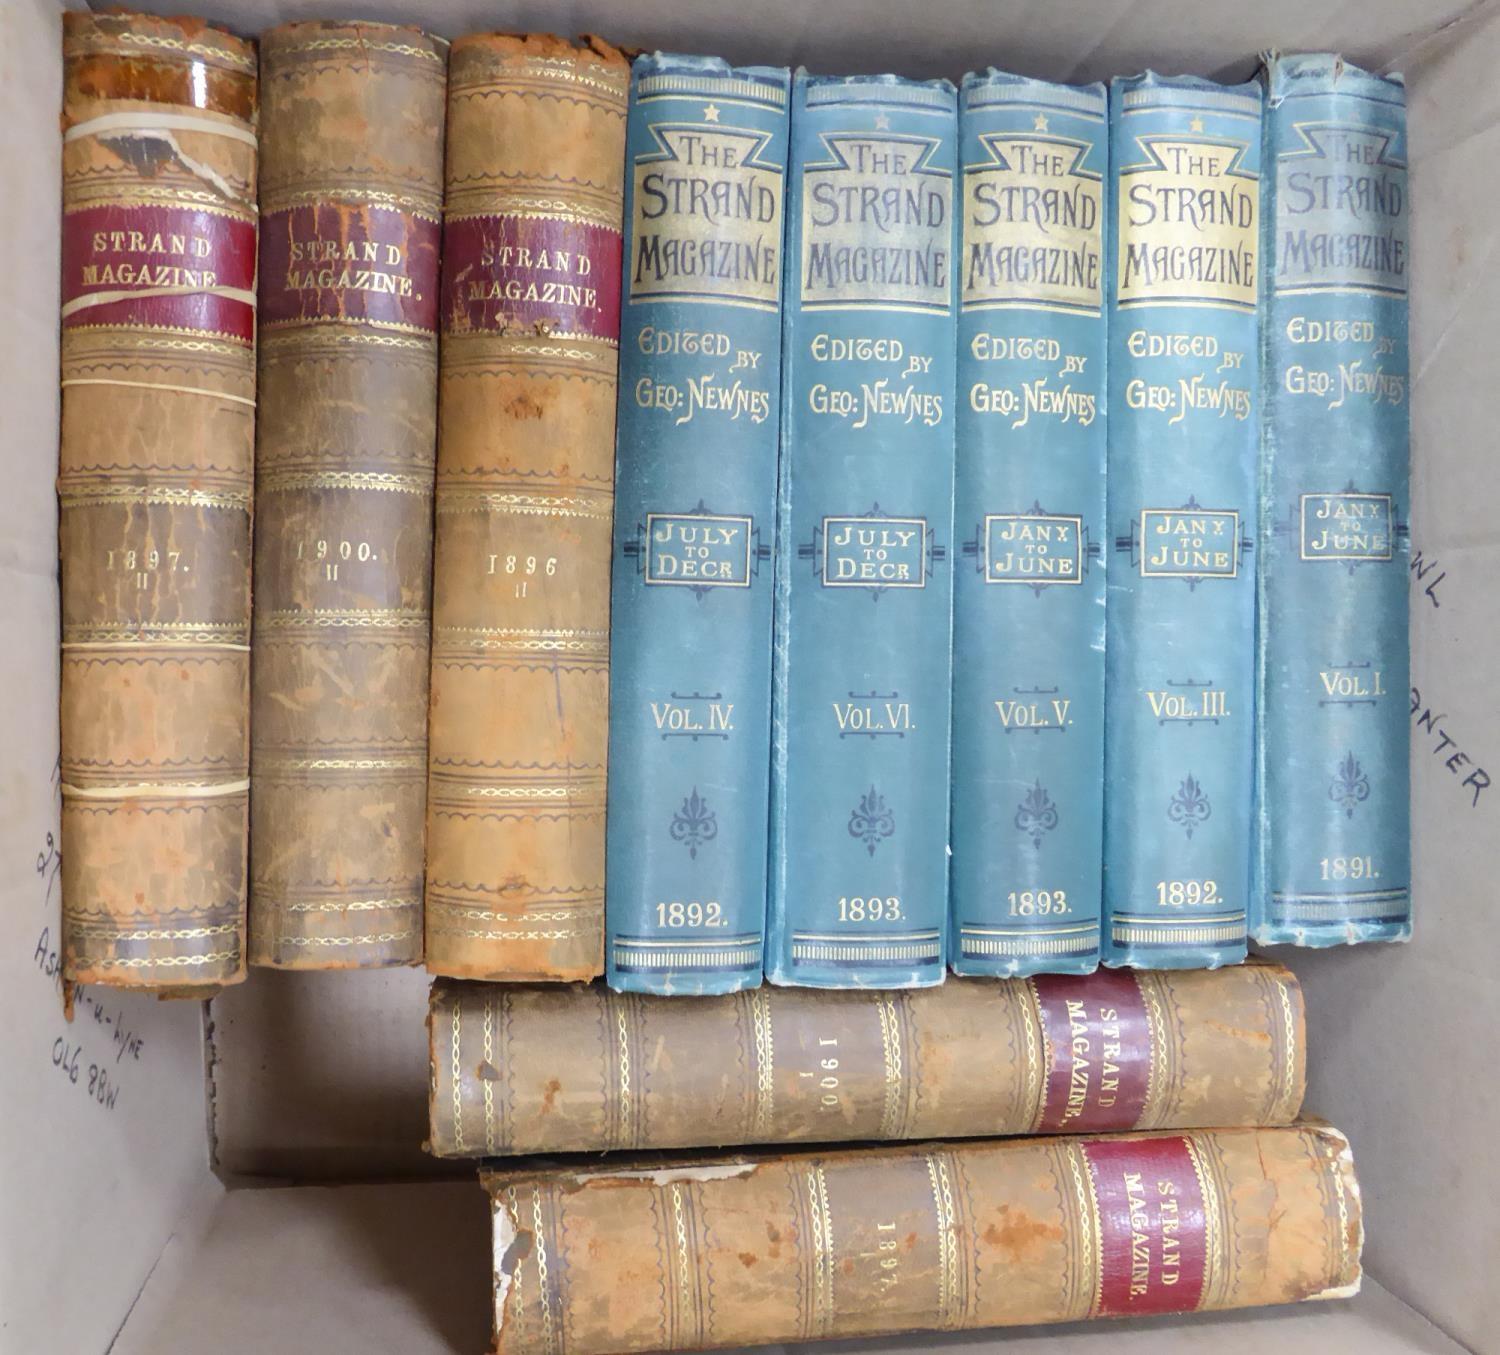 SHERLOCK HOLMES - THE STRAND MAGAZINE George Newnes Volume I, III, IV, V, VI (1891 -93) covering